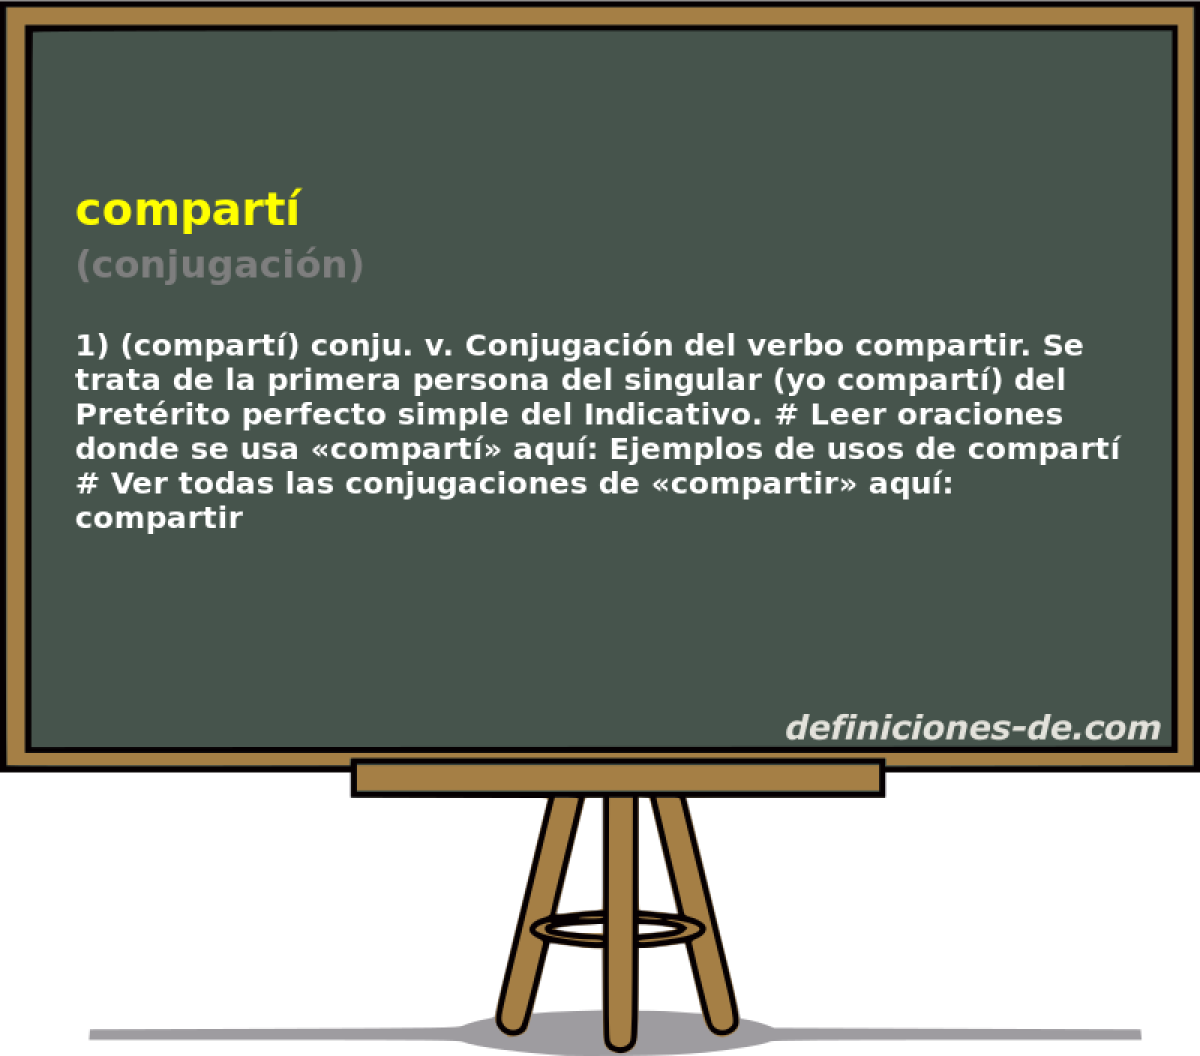 compart (conjugacin)